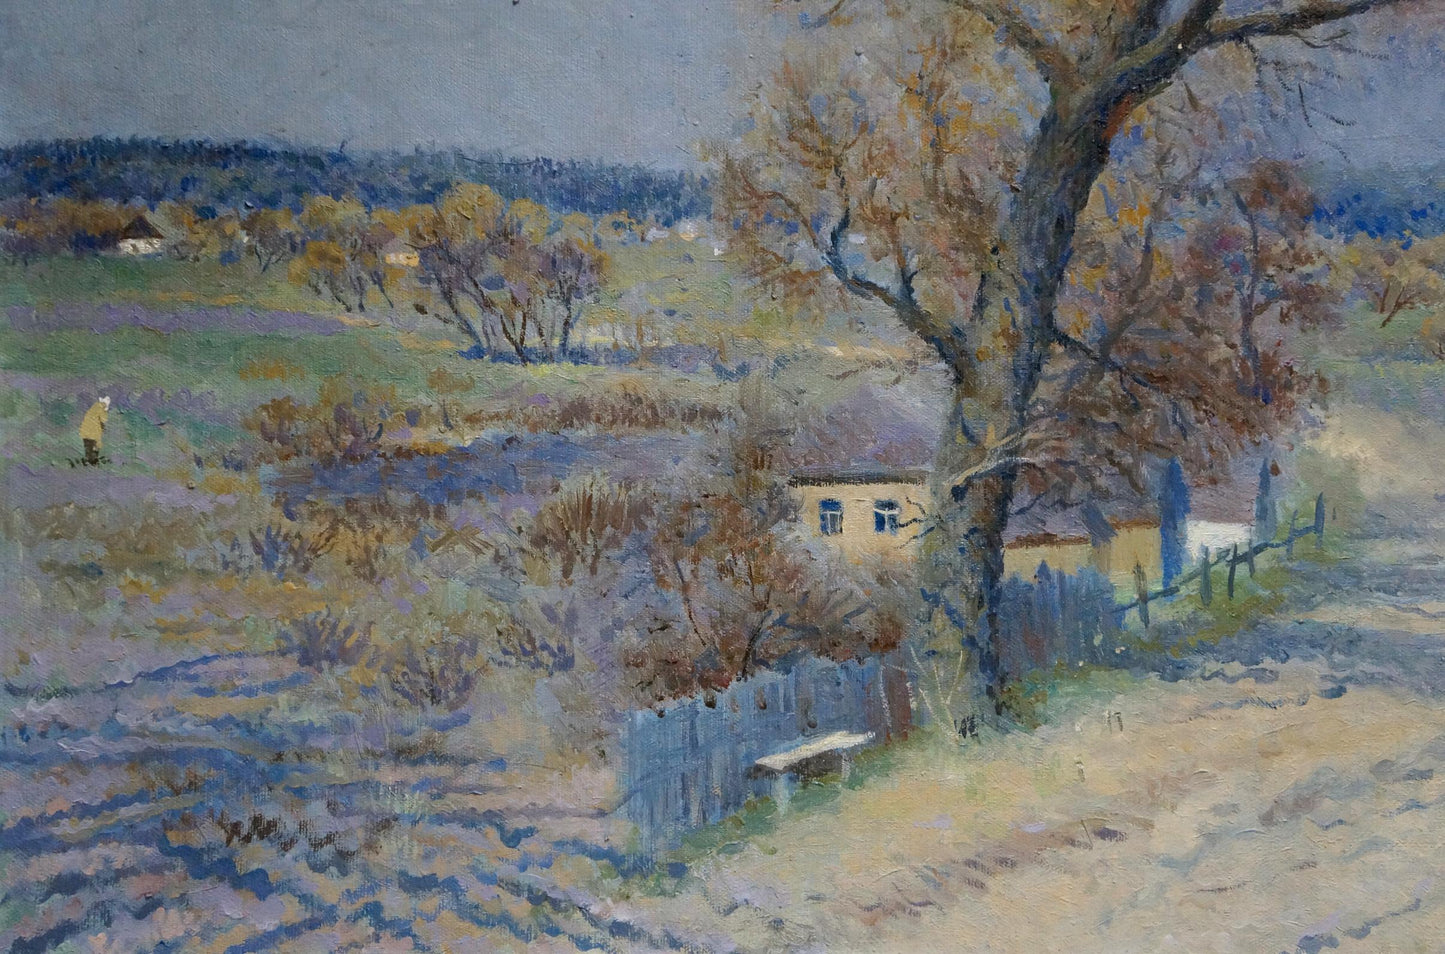 Natalia Teteruk's oil painting portrays a village landscape